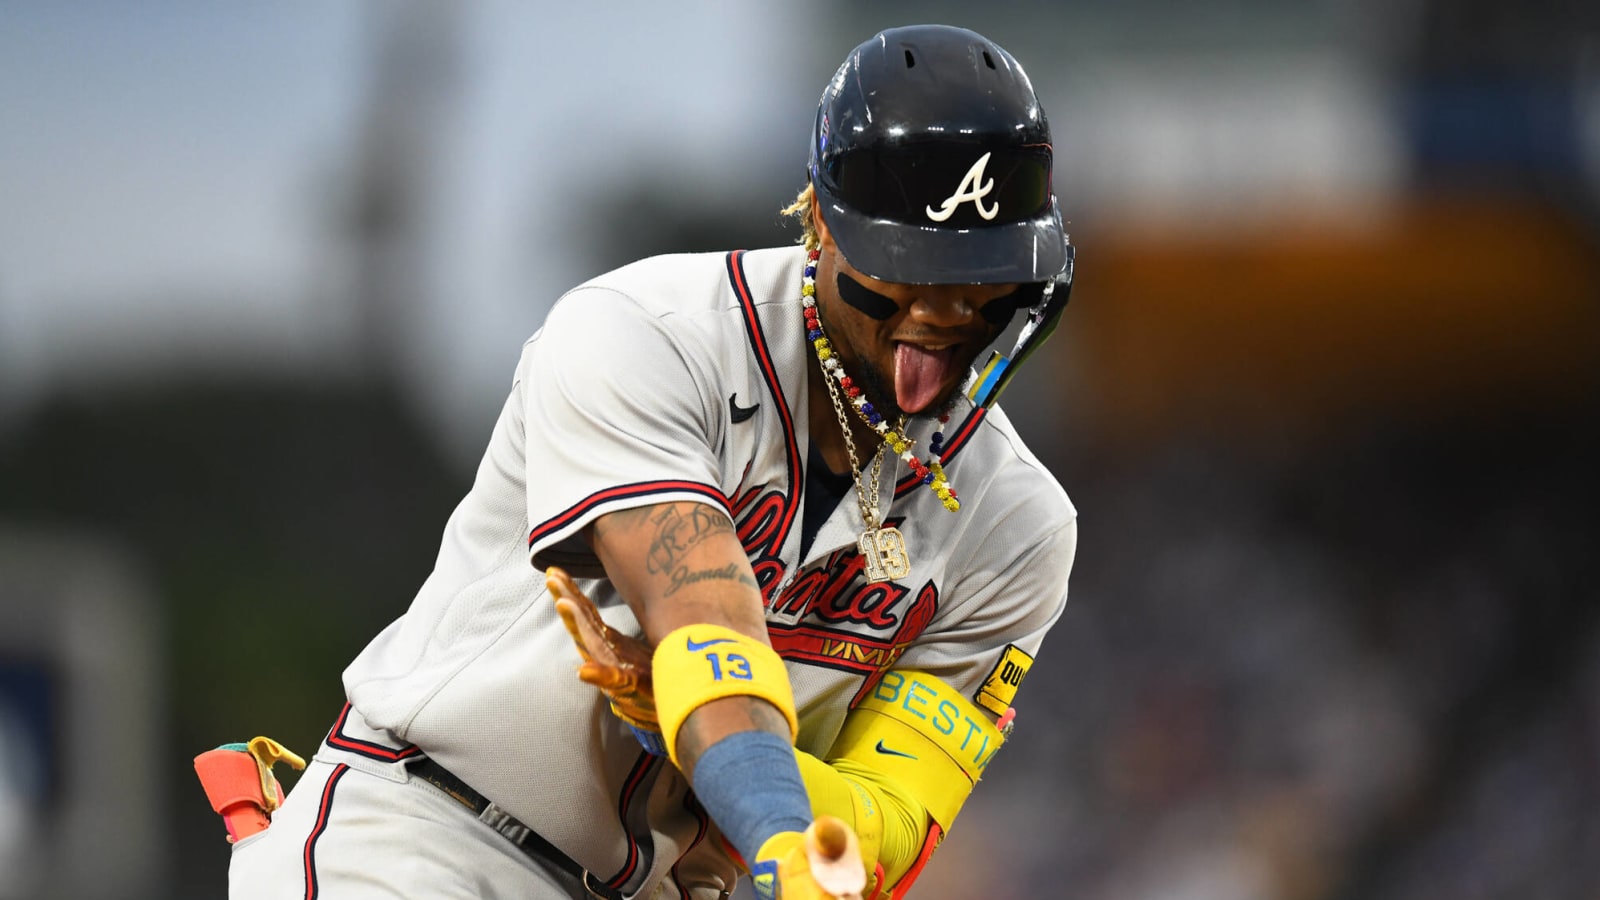 Watch: Braves' Ronald Acuna Jr. crushes hardest hit ball of MLB season